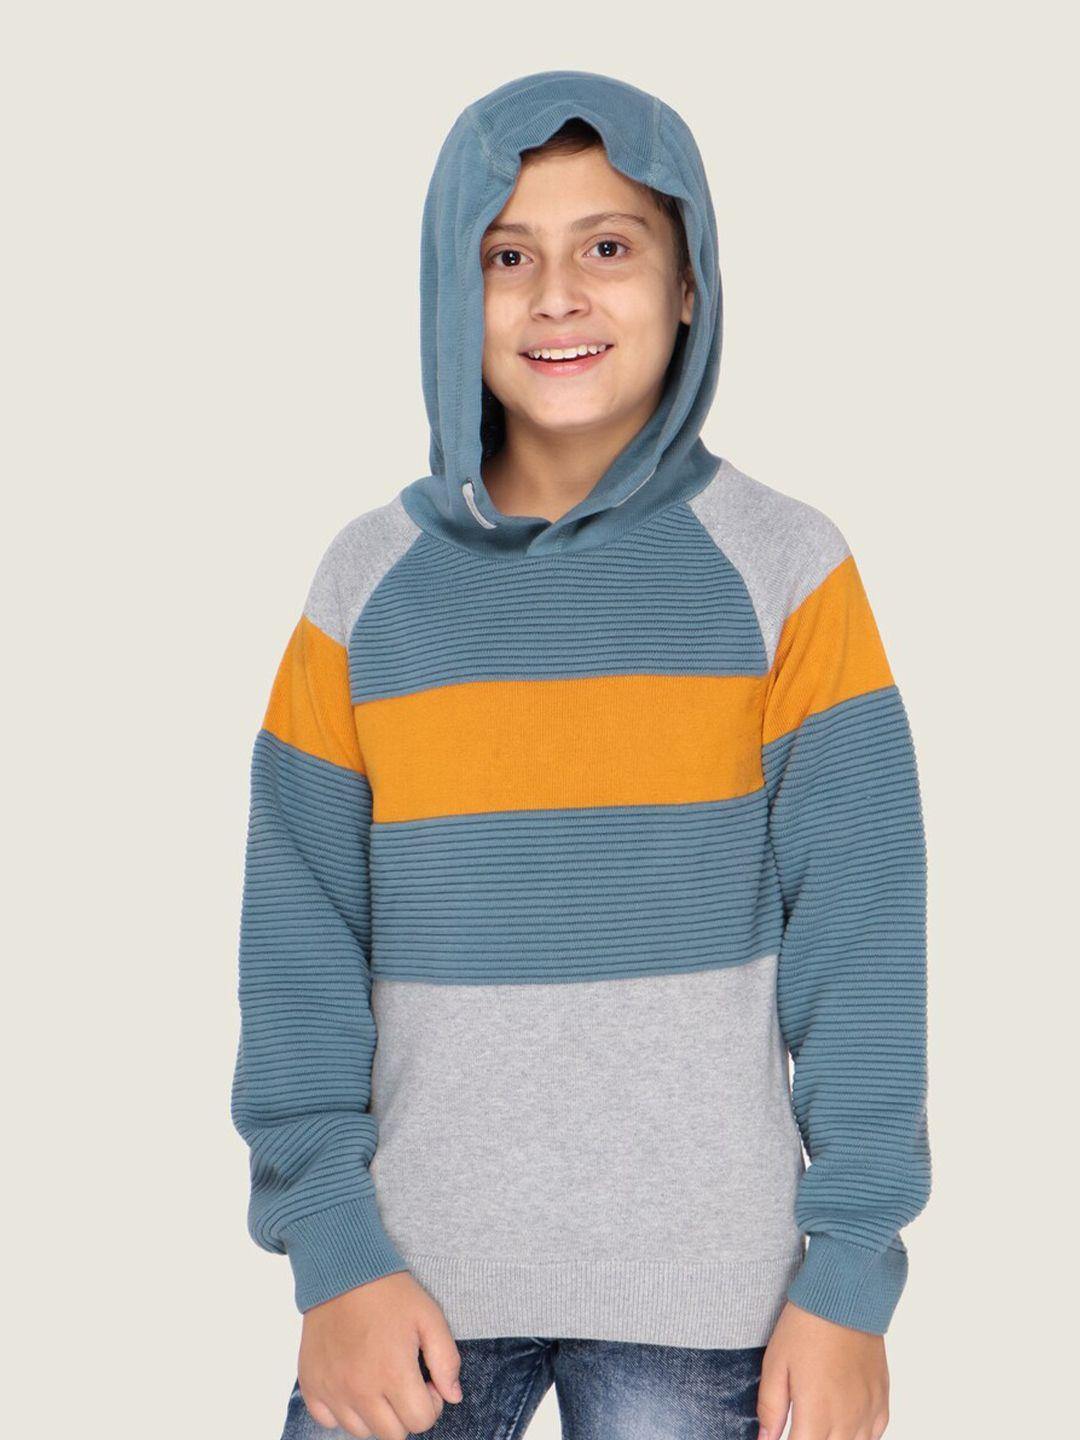 lasnak boys grey & orange striped cotton pullover sweater